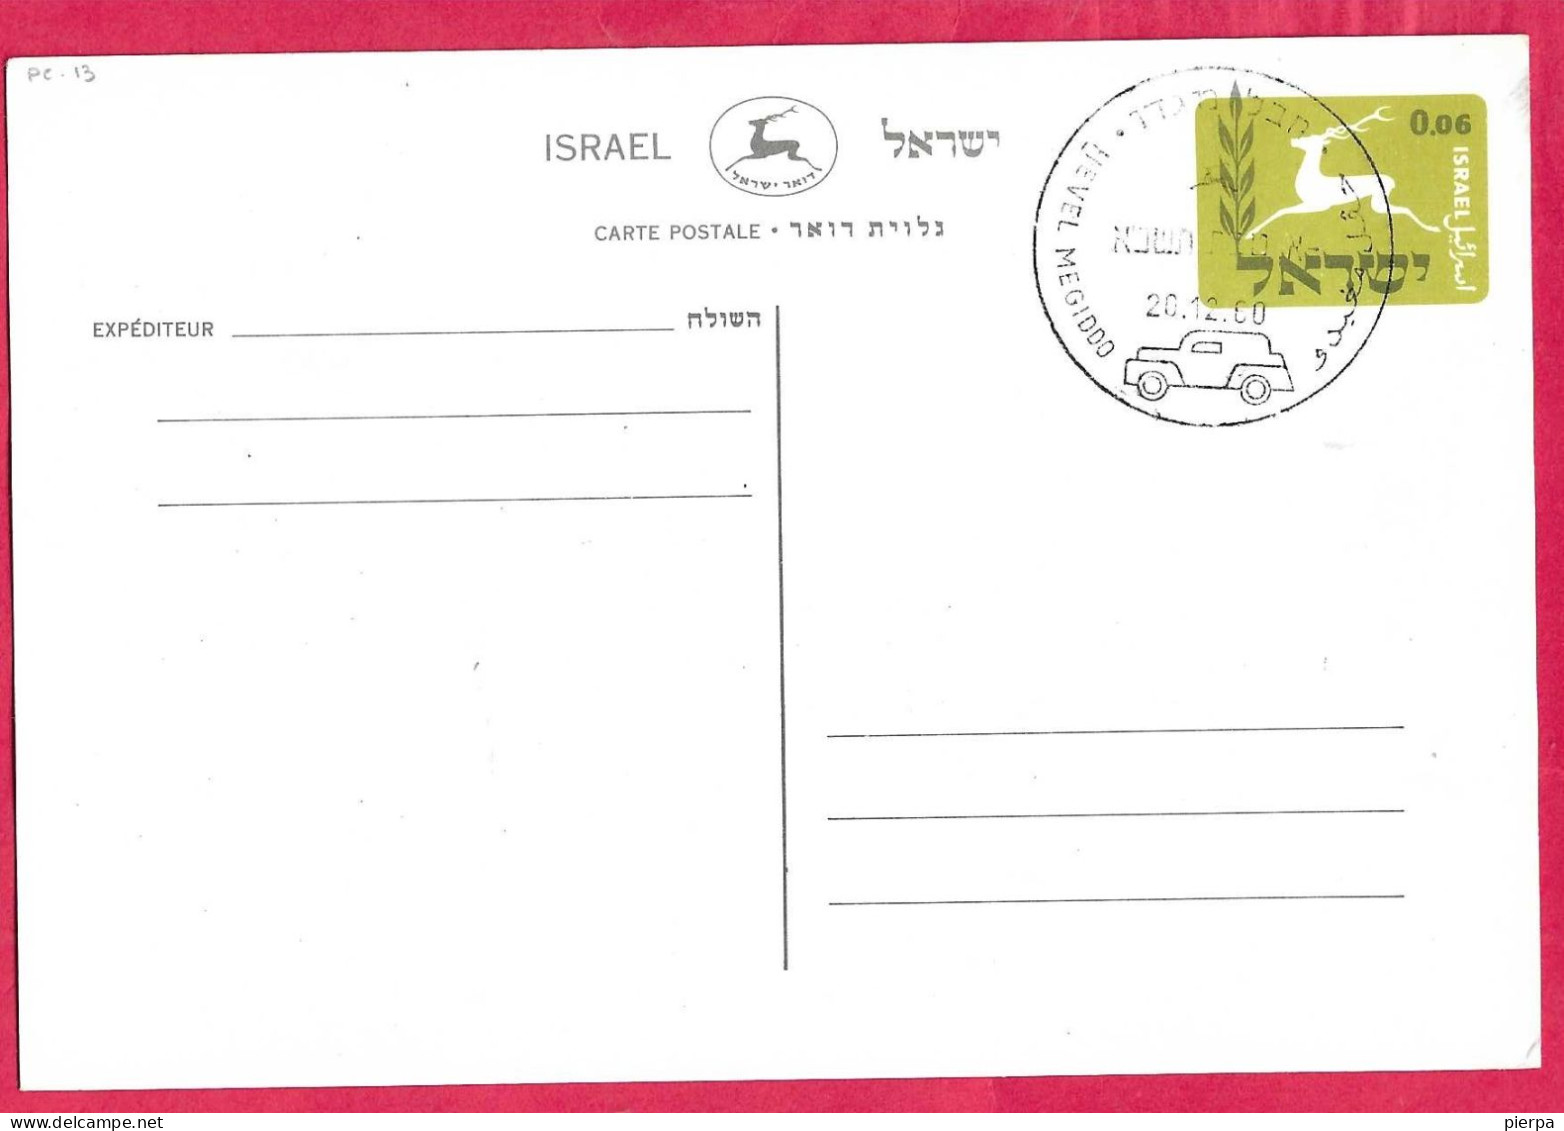 ISRAELE - INTERO CARTOLINA POSTALE 0,06 - ANNULLO SPECIALE "HEVEL MEGIDDO *20.12.60* - Covers & Documents